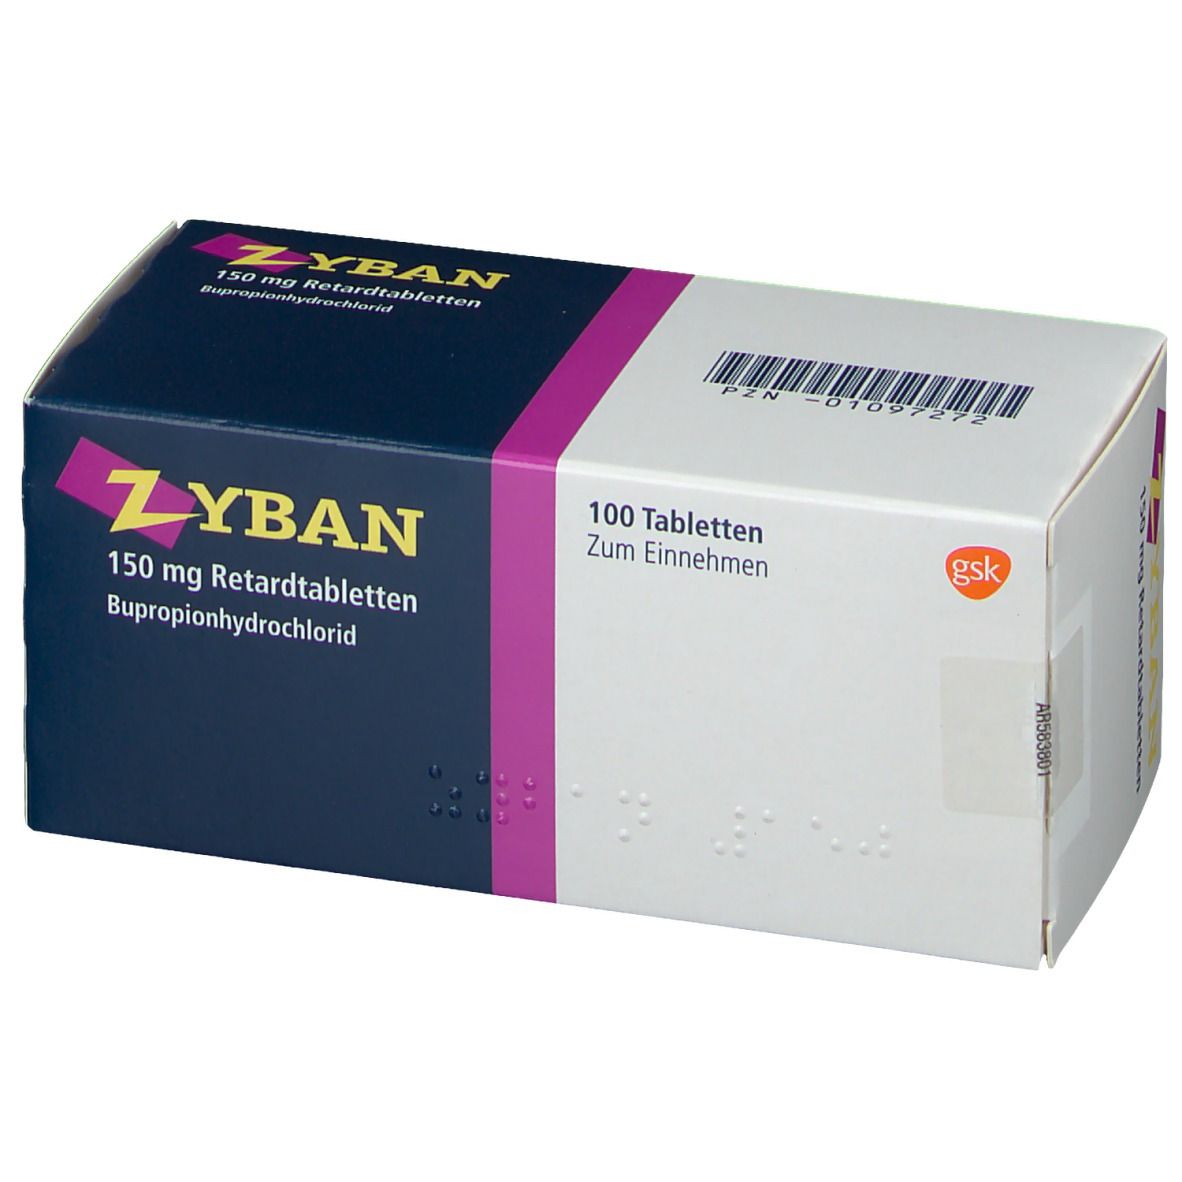 Zyban 150 mg Retardtabletten